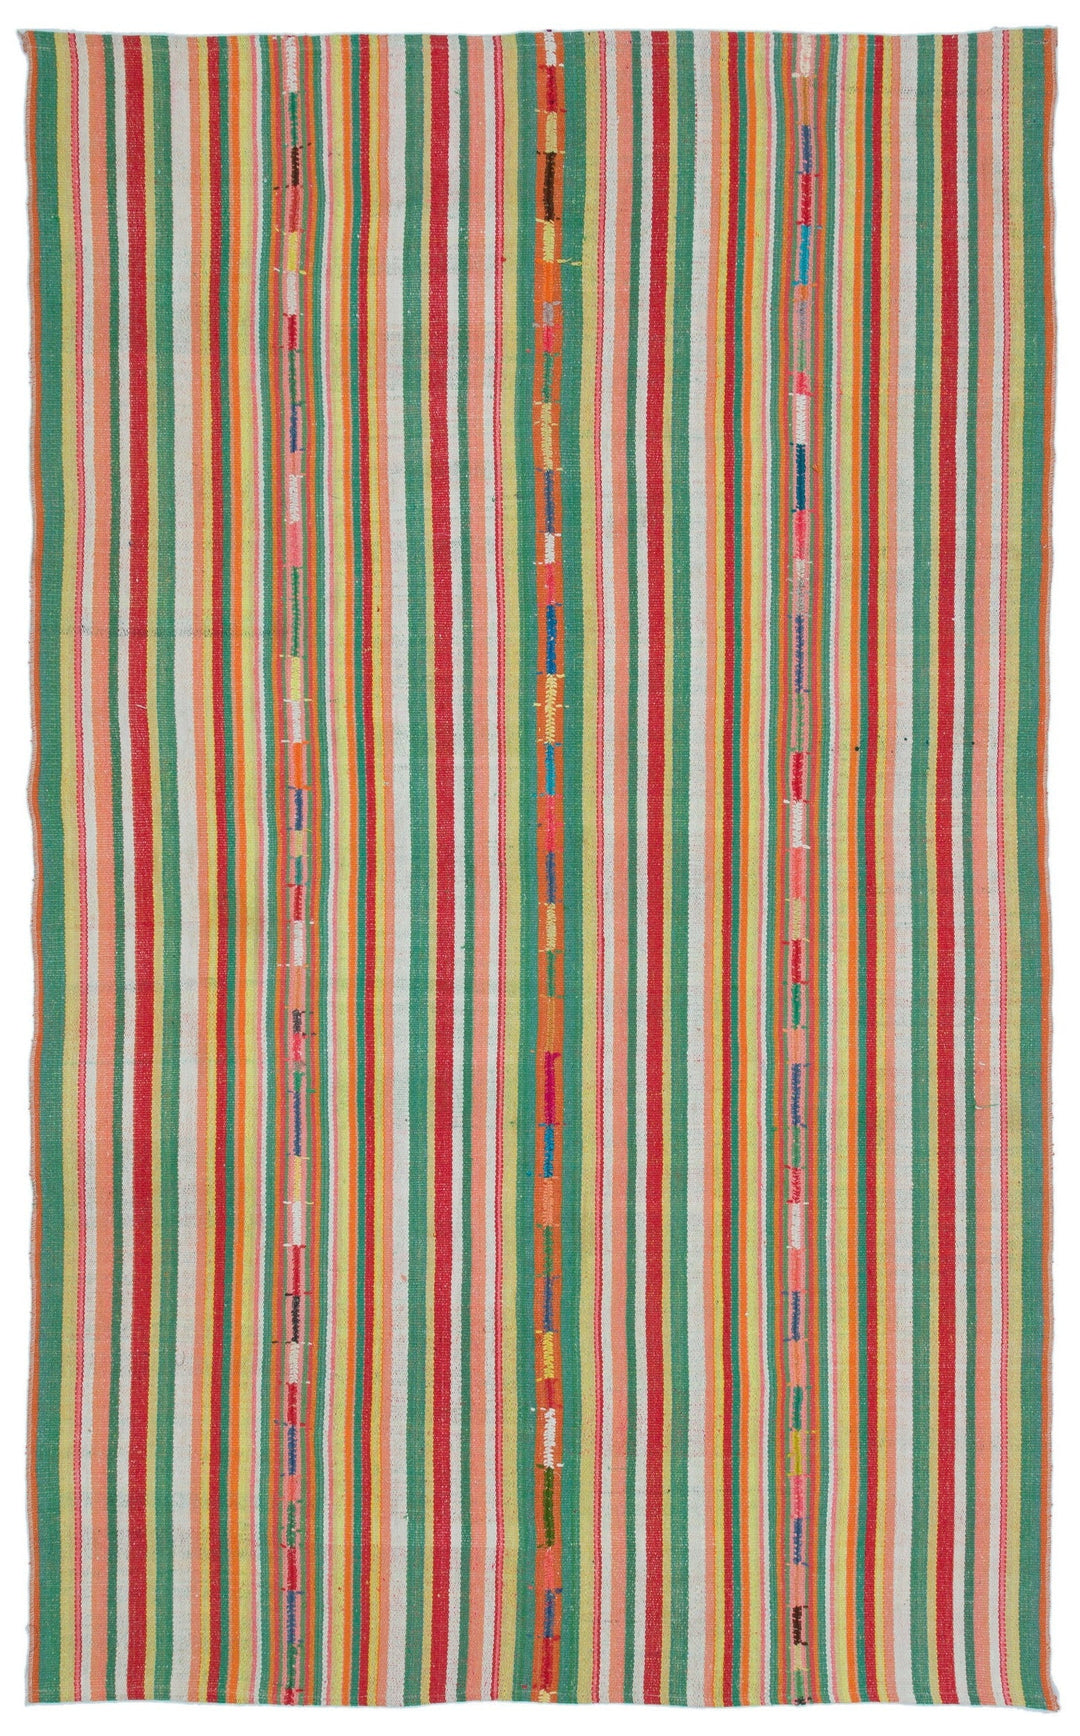 Cretan Green Striped Wool Hand-Woven Carpet 165 x 264